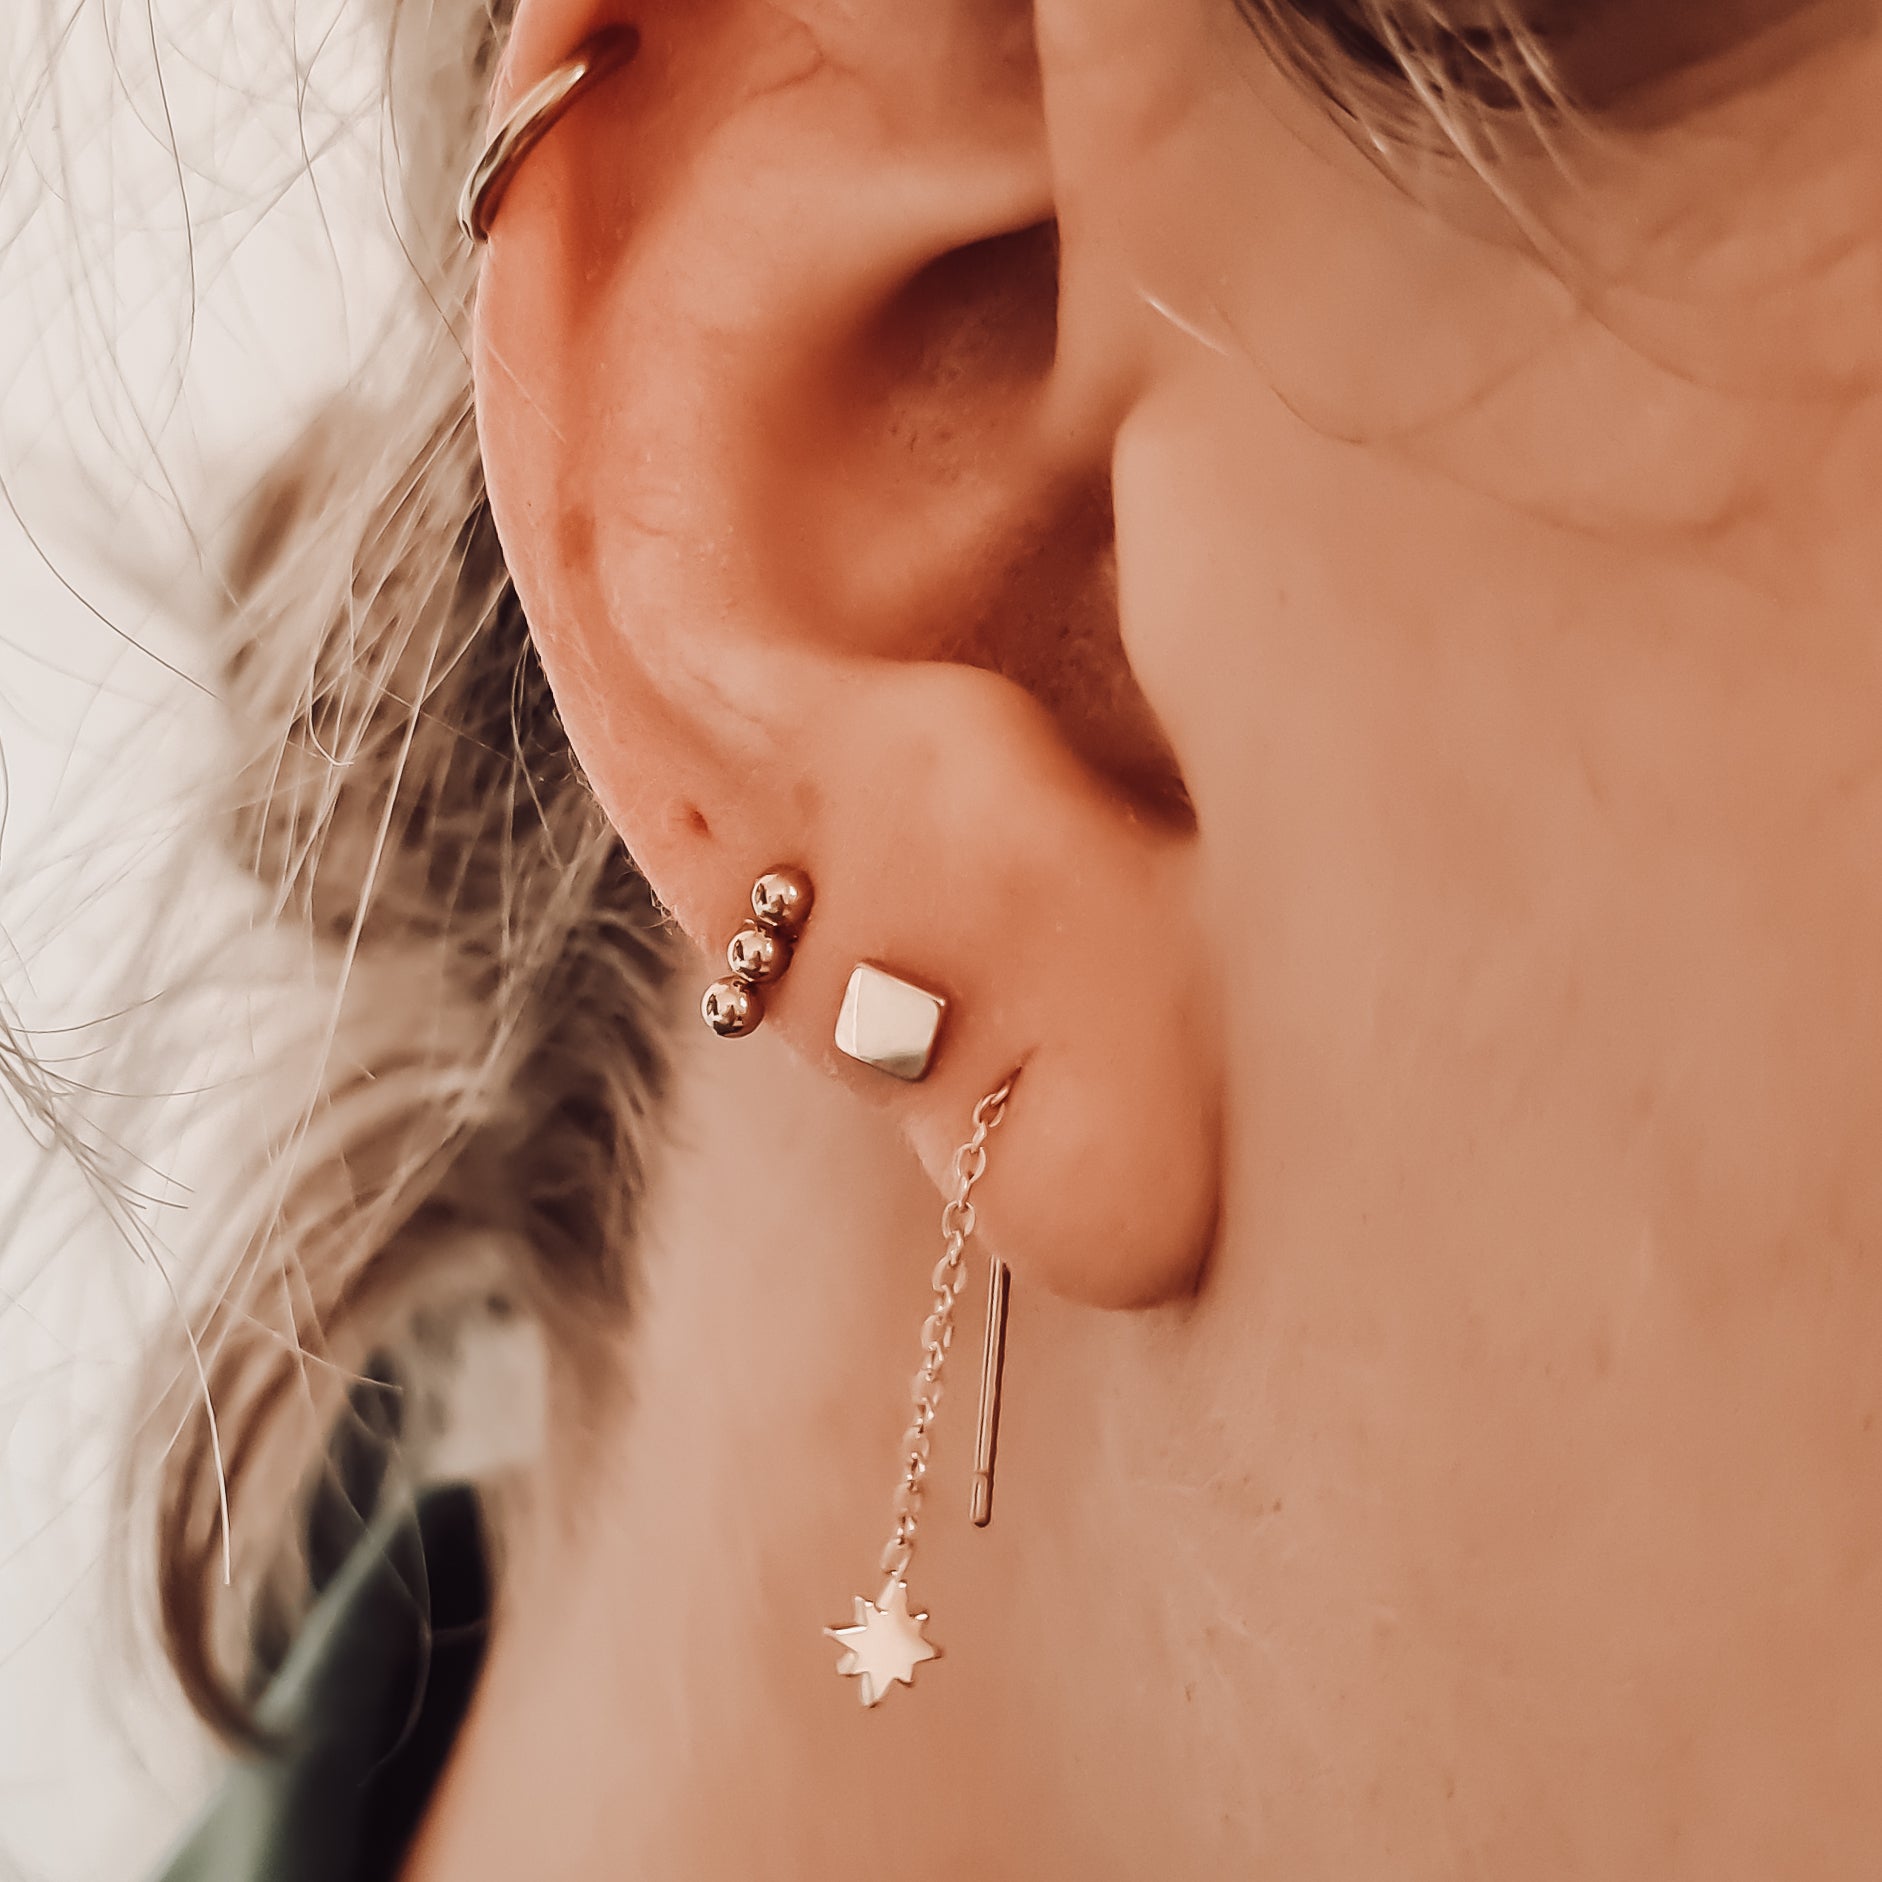 Chain earrings pool star